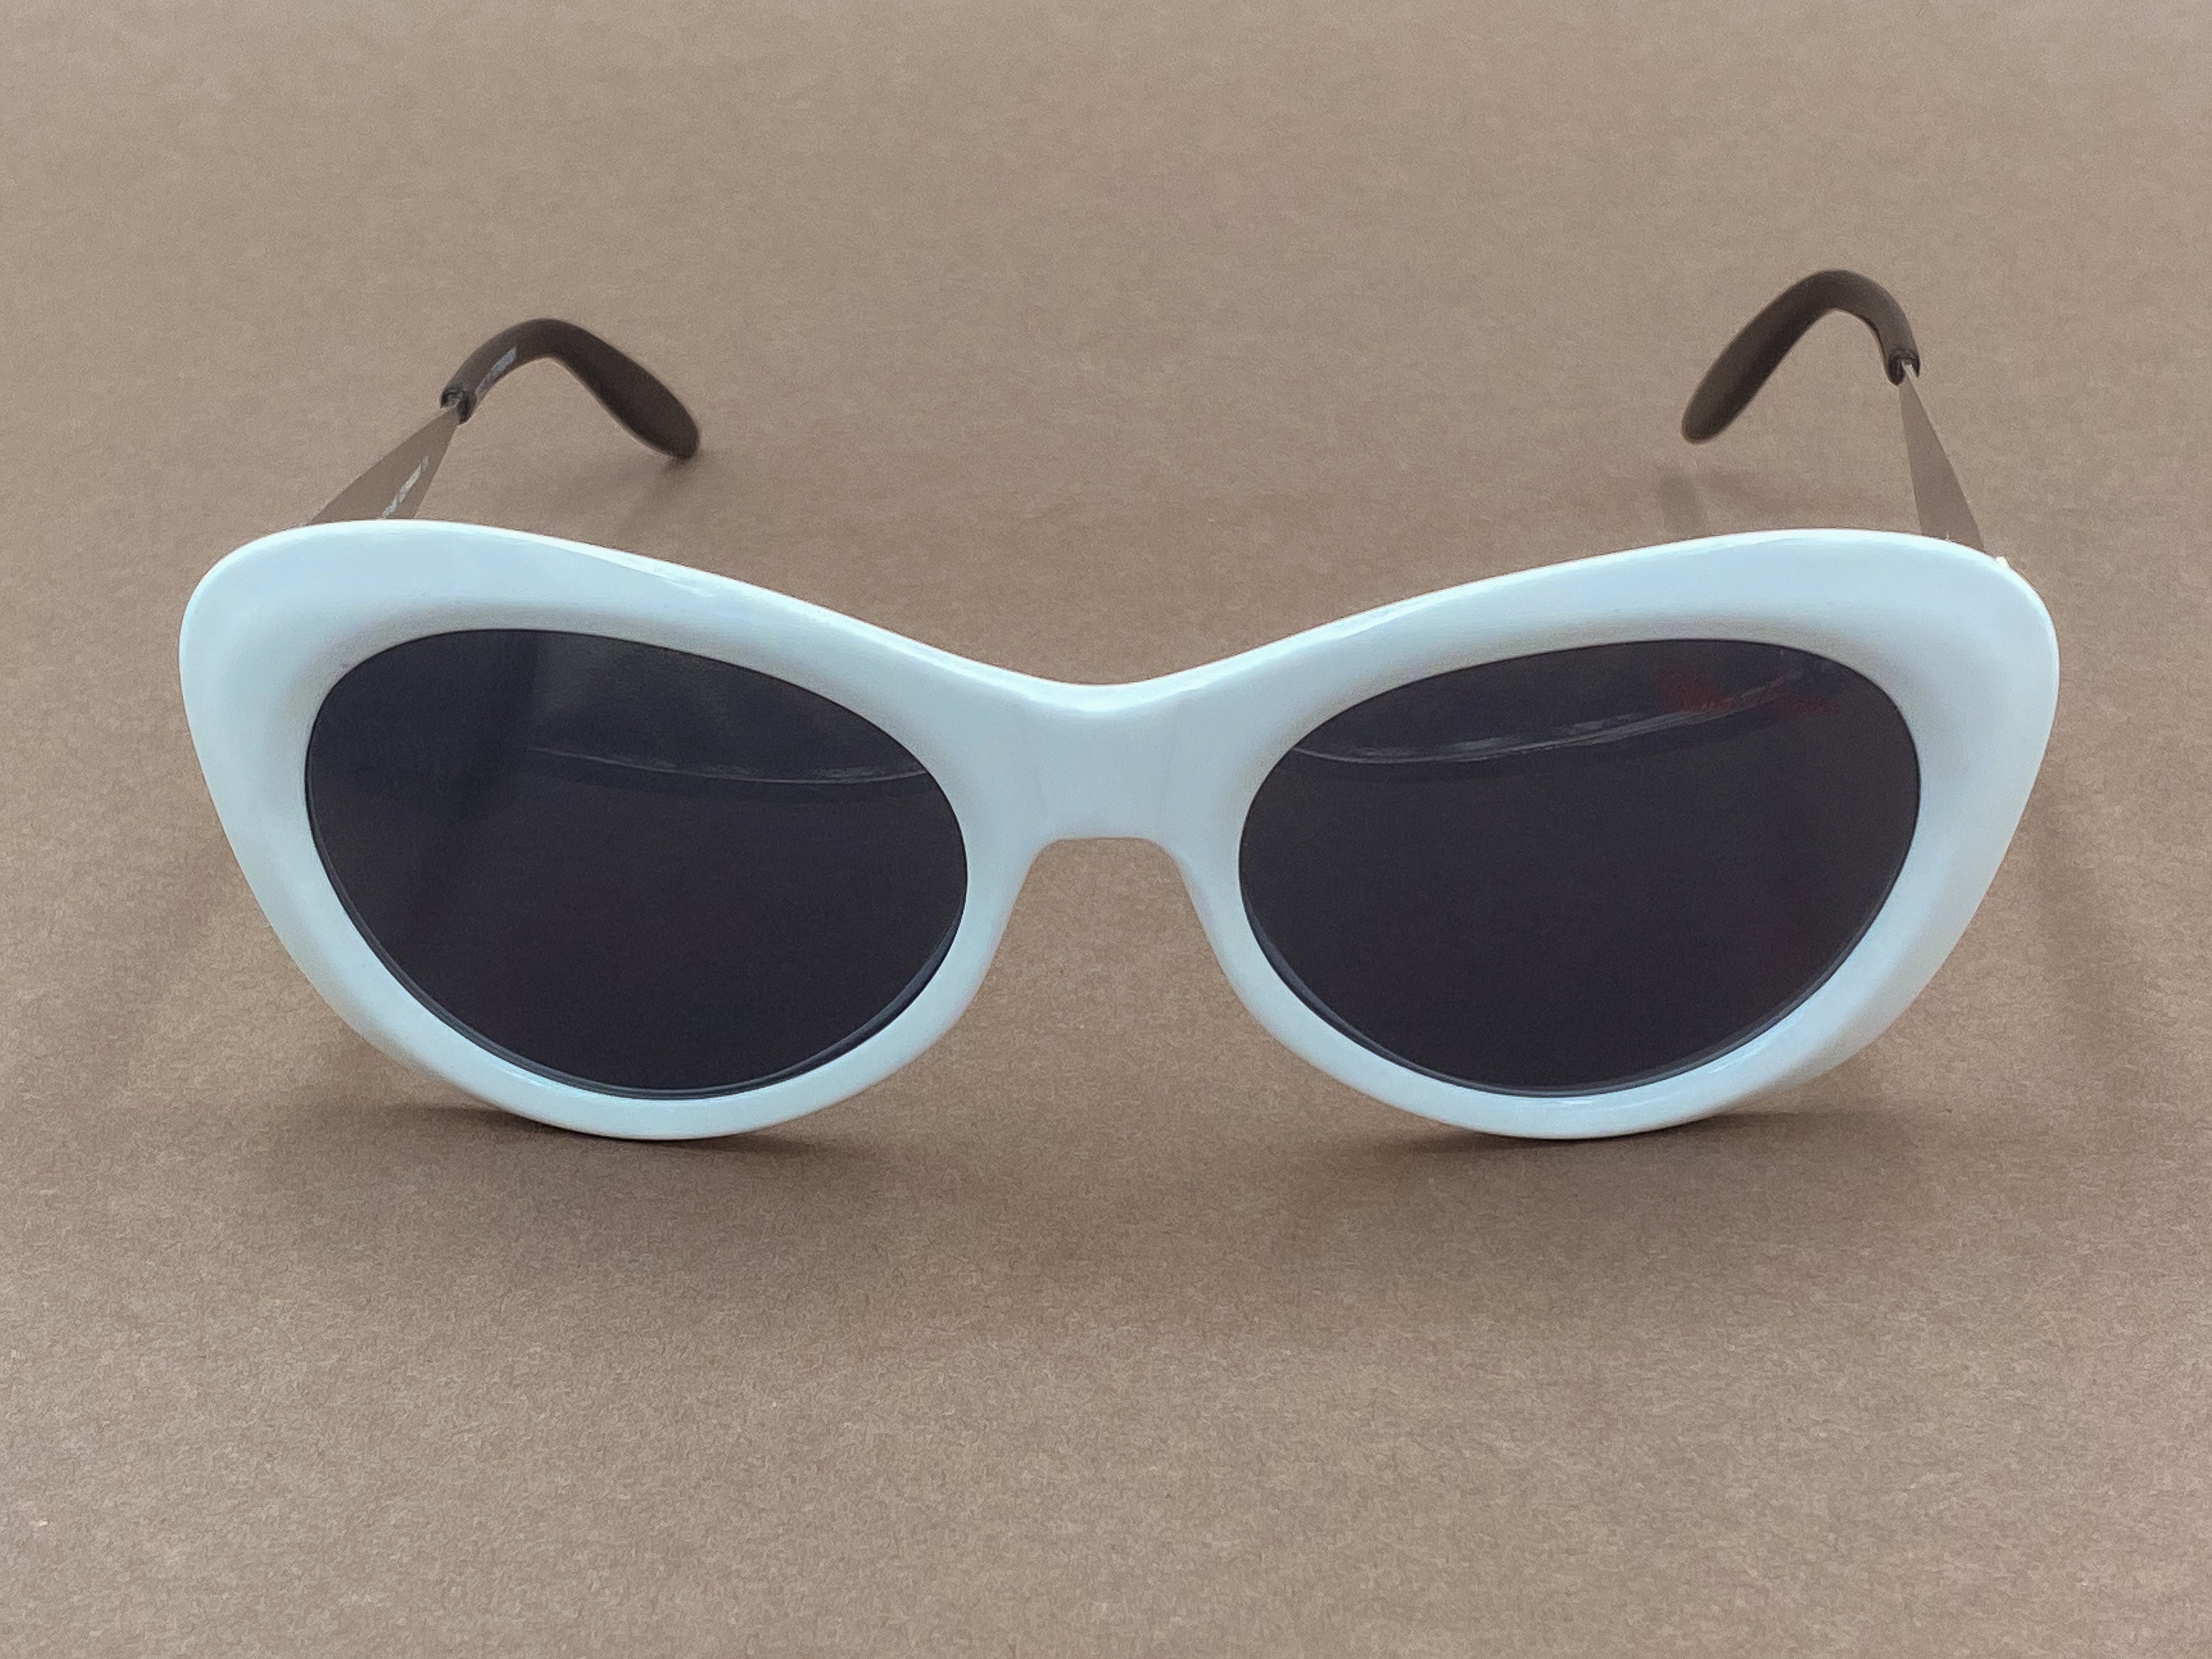 Crazyspects® - Get Sunglasses for women Online @ best price